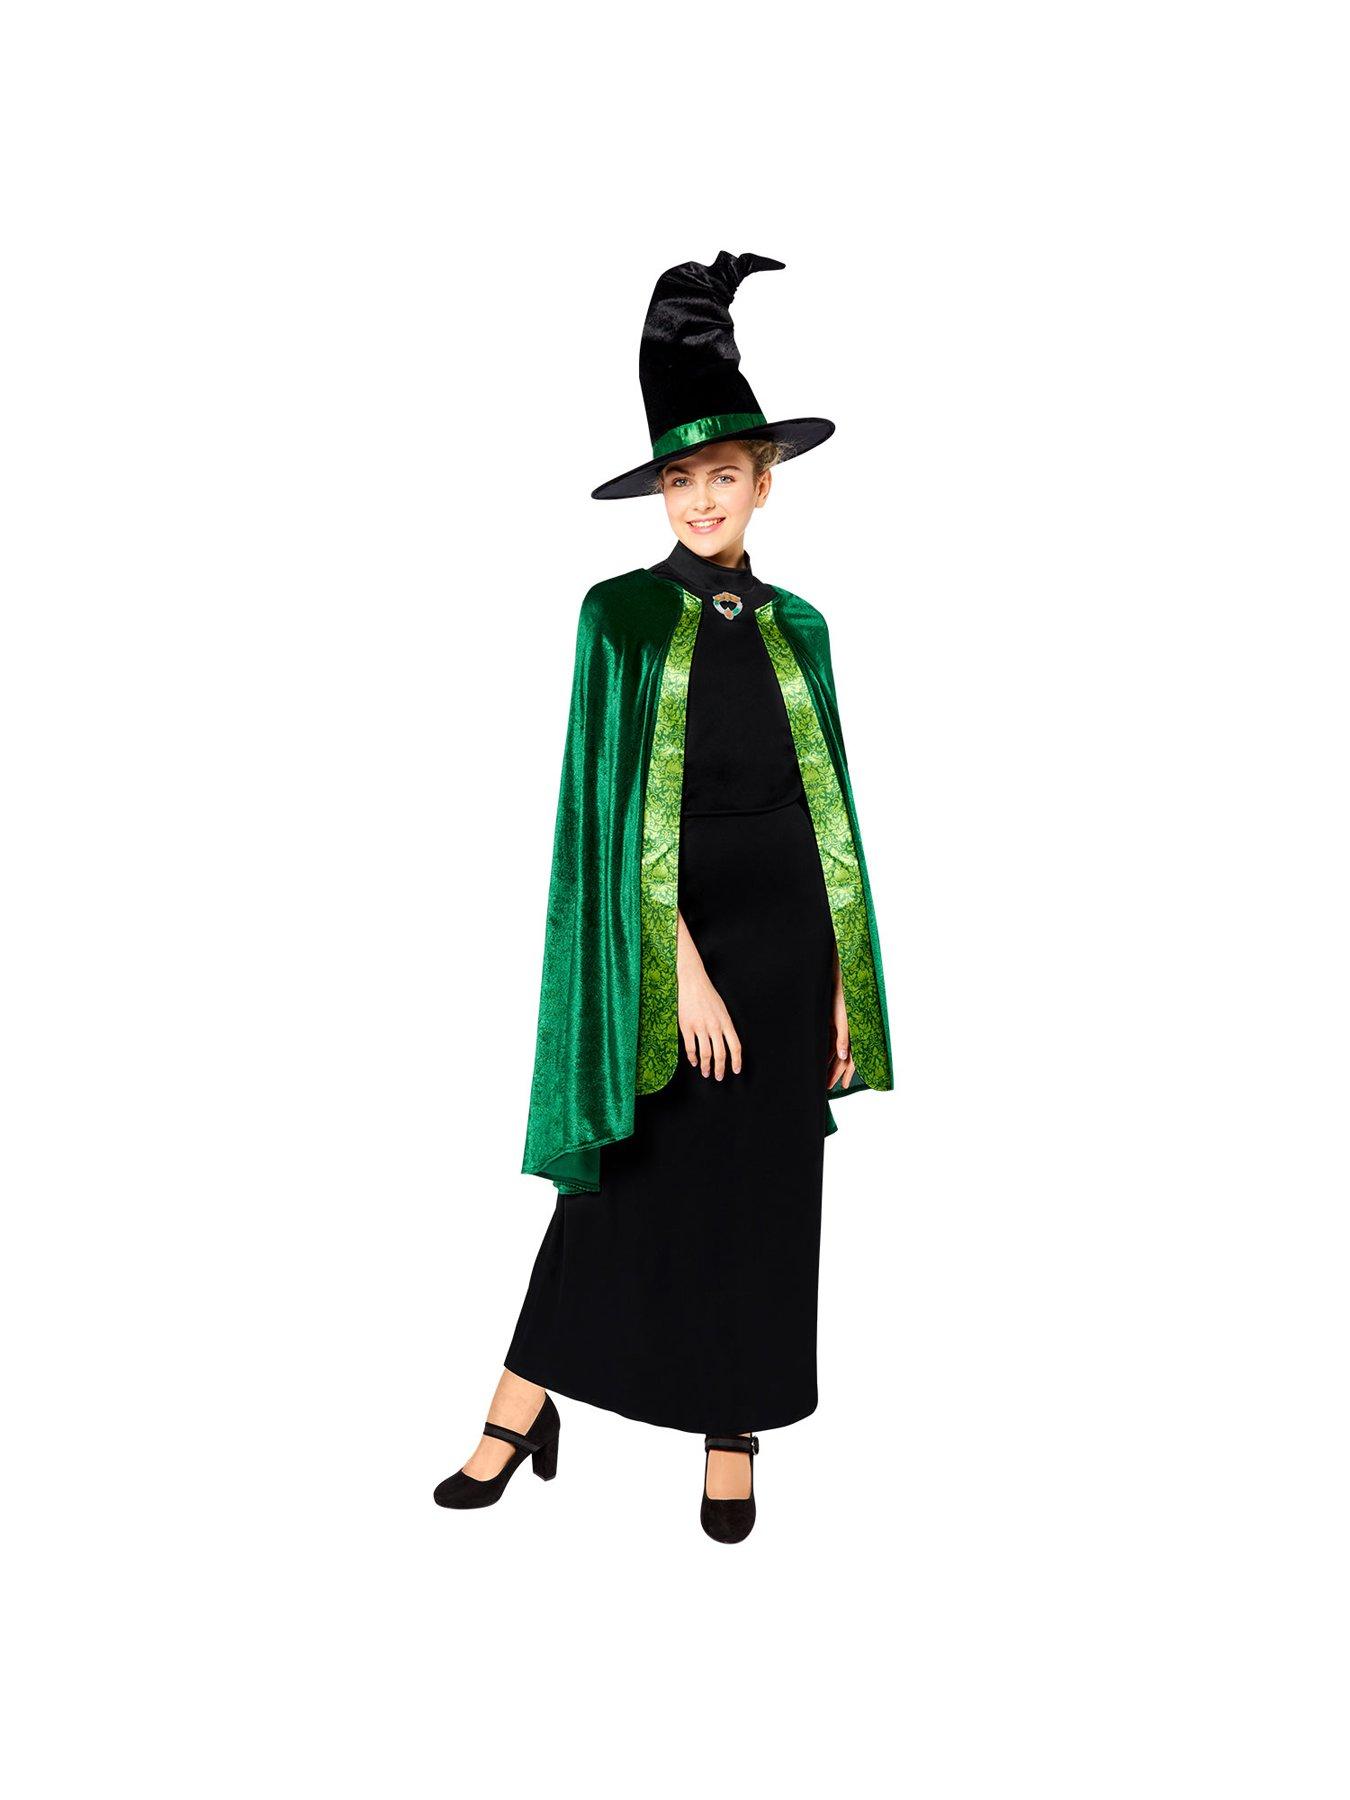 Halloween Costume Ideas With a Little Black Dress | POPSUGAR Fashion UK